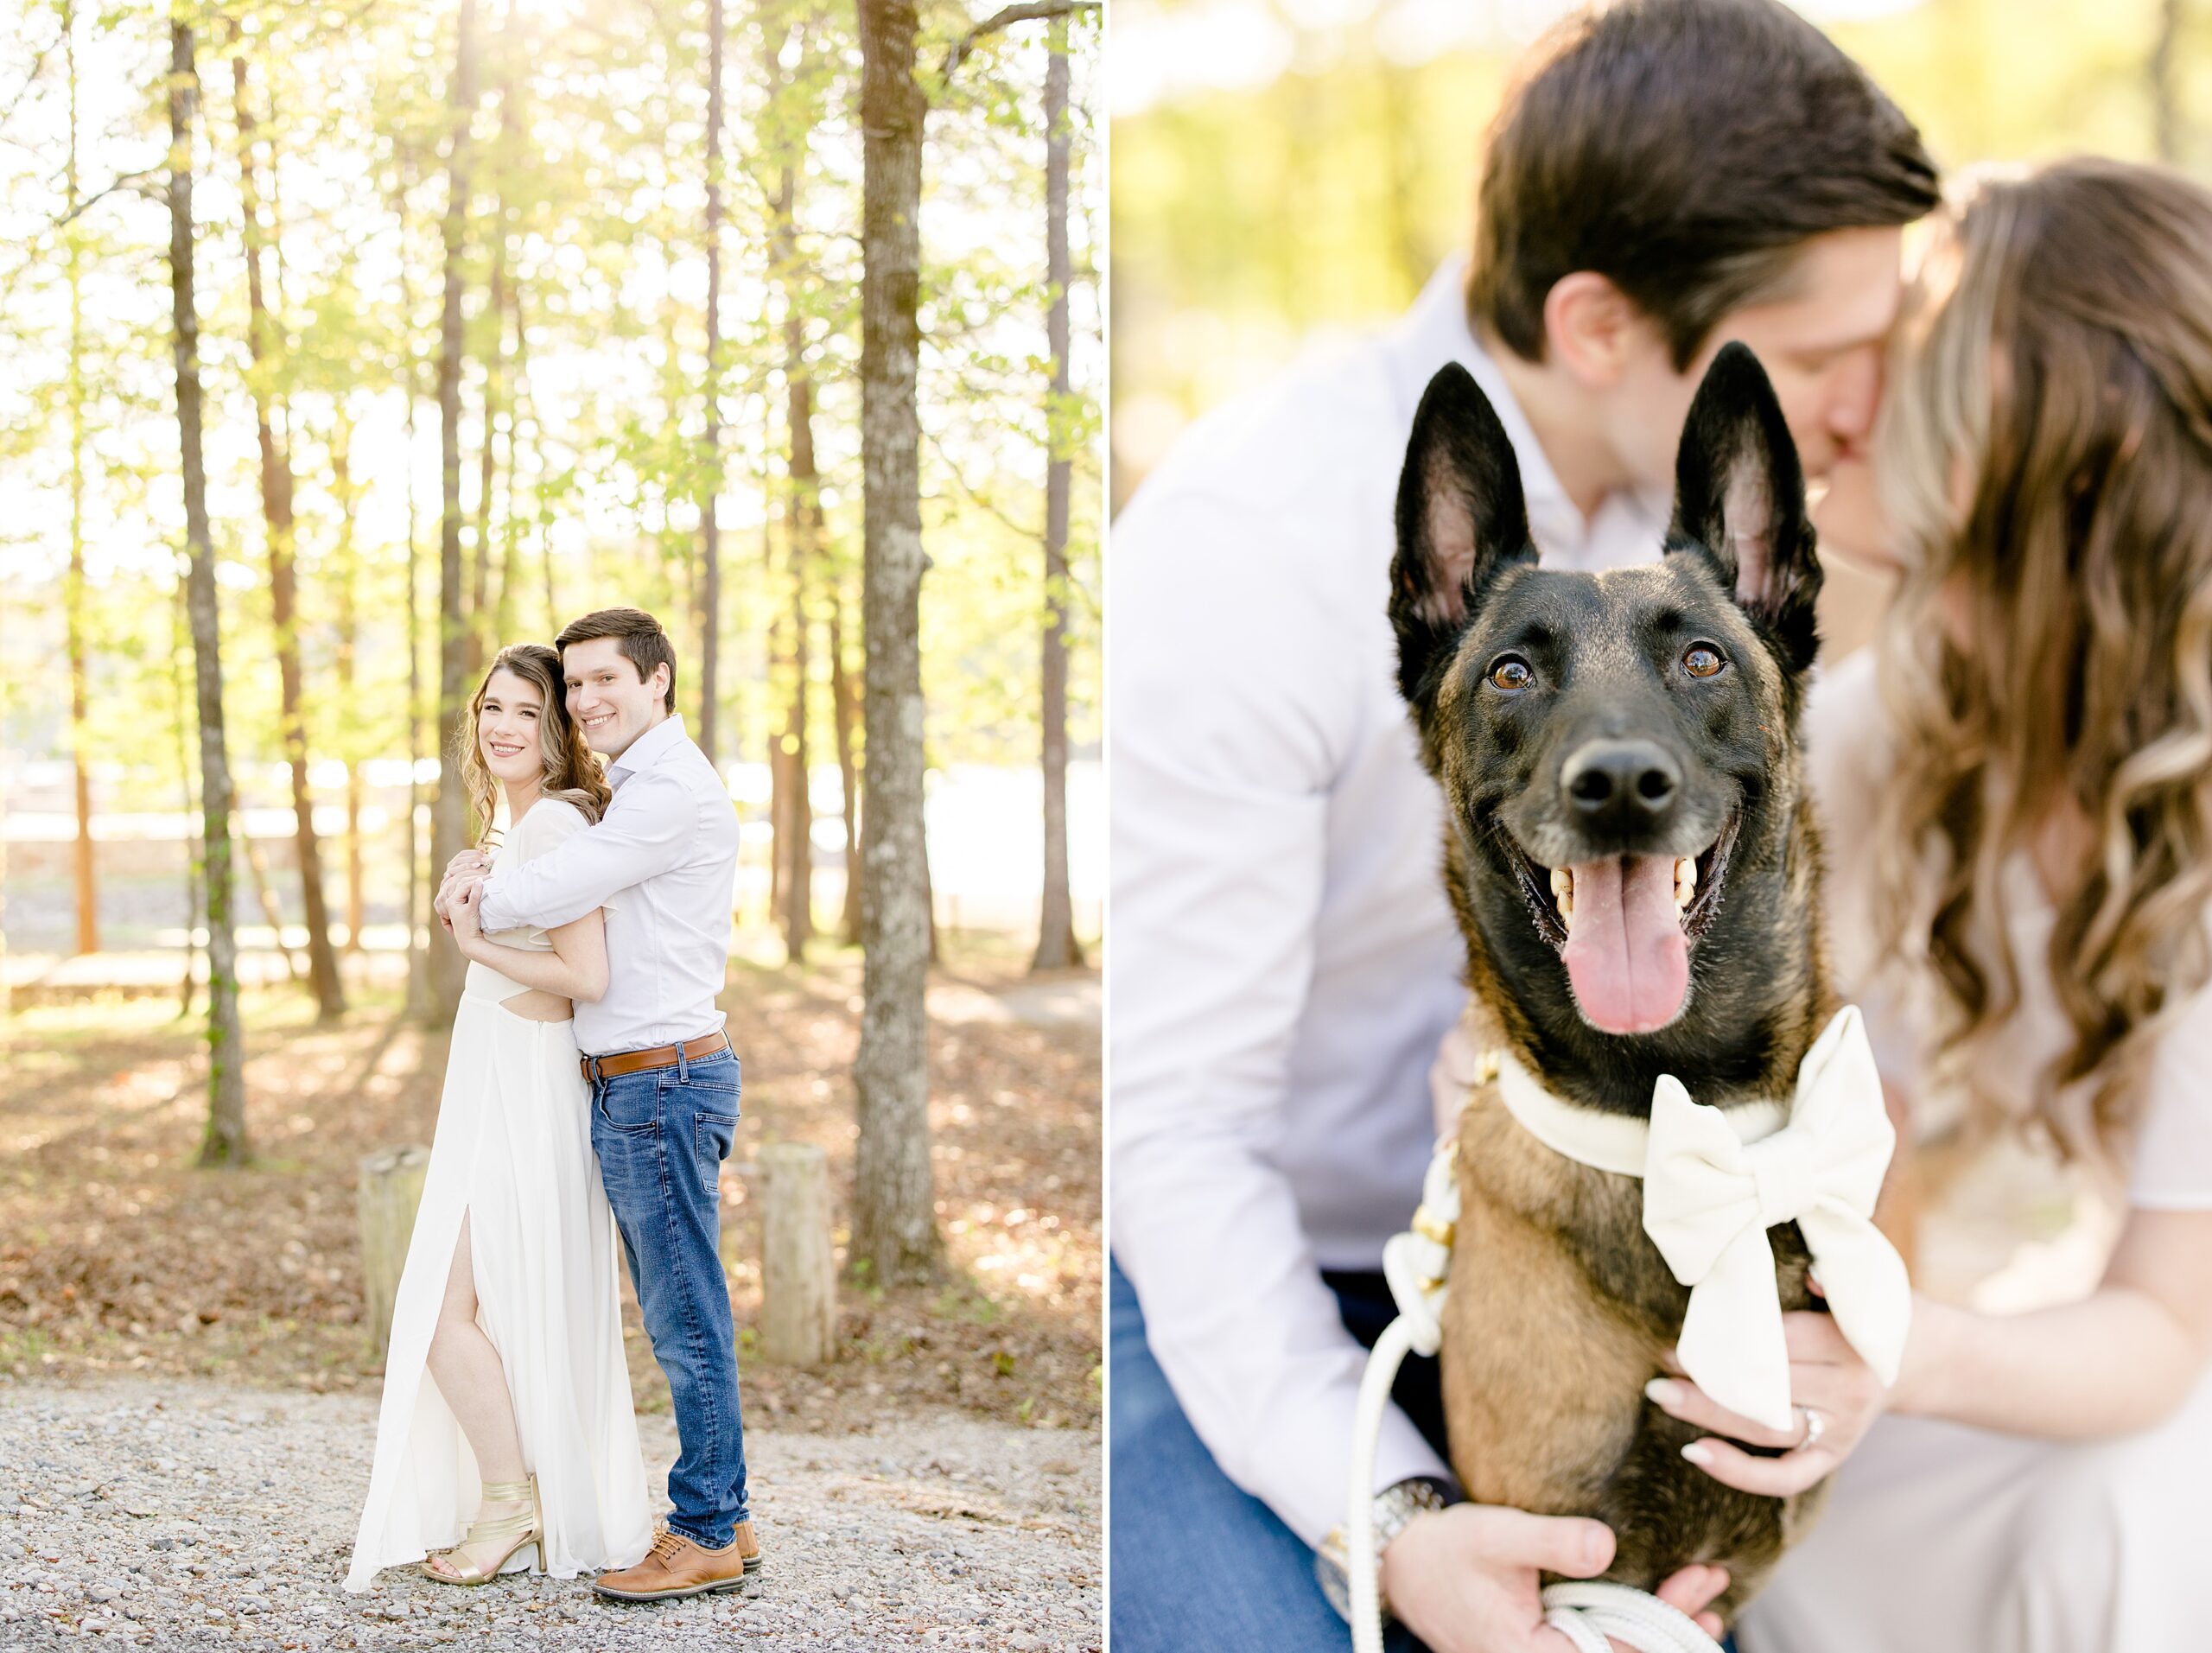 Samantha & John Oak Mountain State Park Engagement Session - Katie & Alec Photography Birmingham, Alabama Wedding Photographers